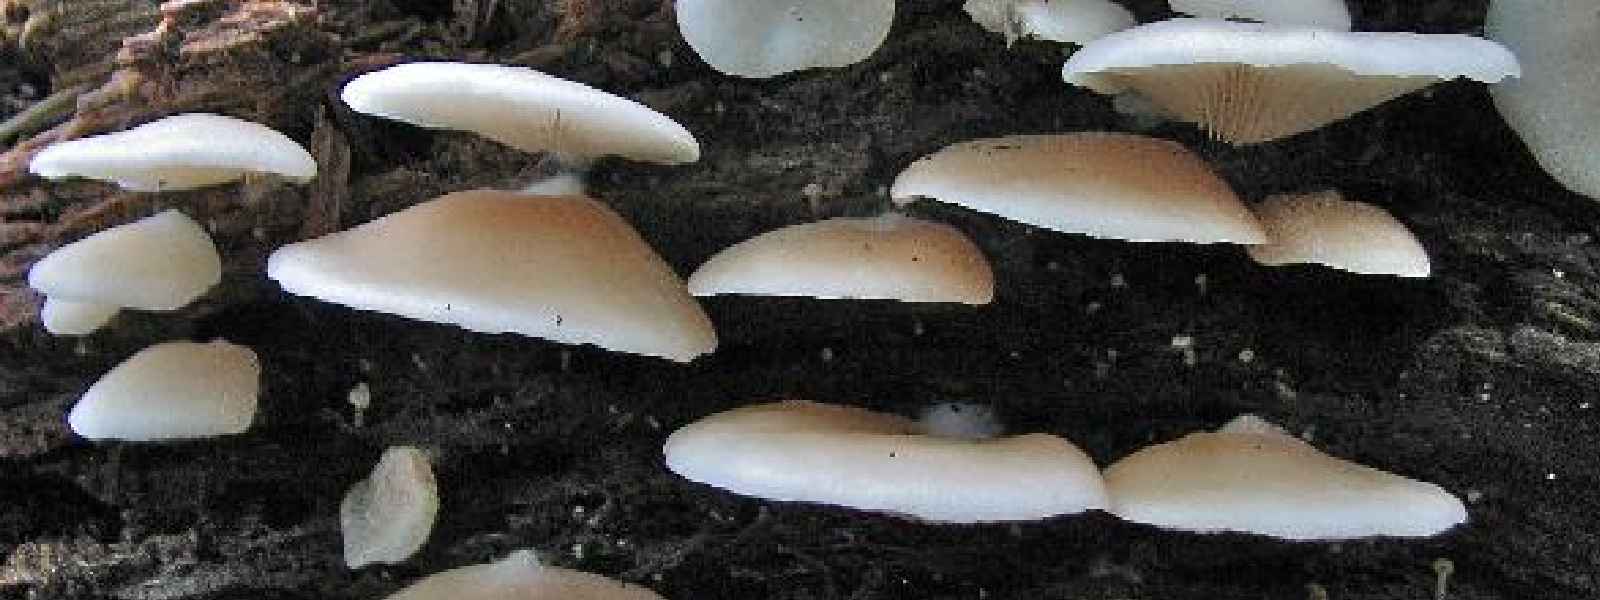 New mushroom species discovered from Sri Lanka